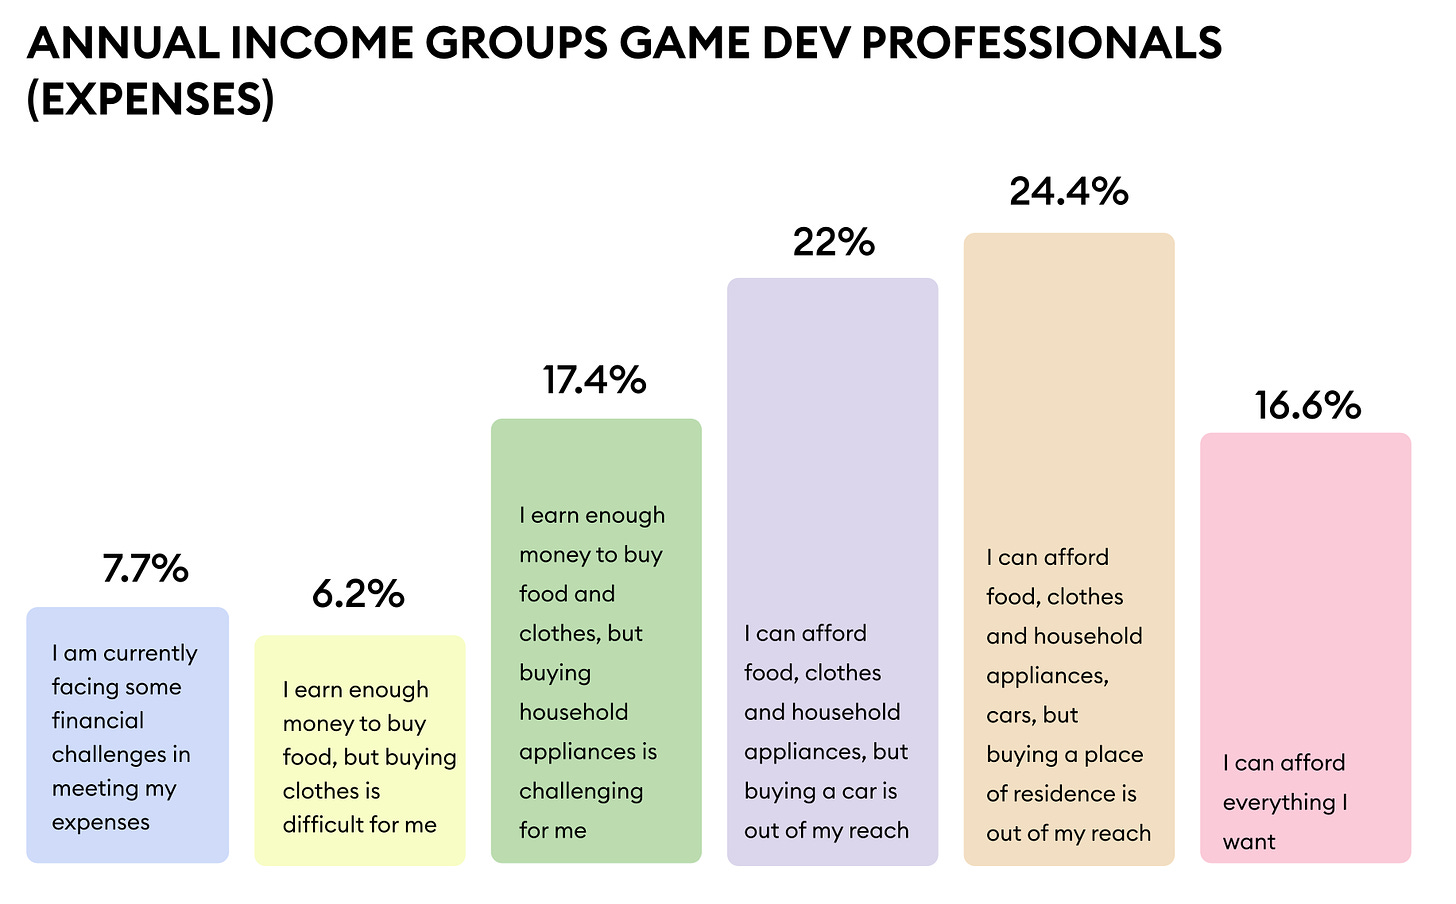 Annual income gamedev professionals